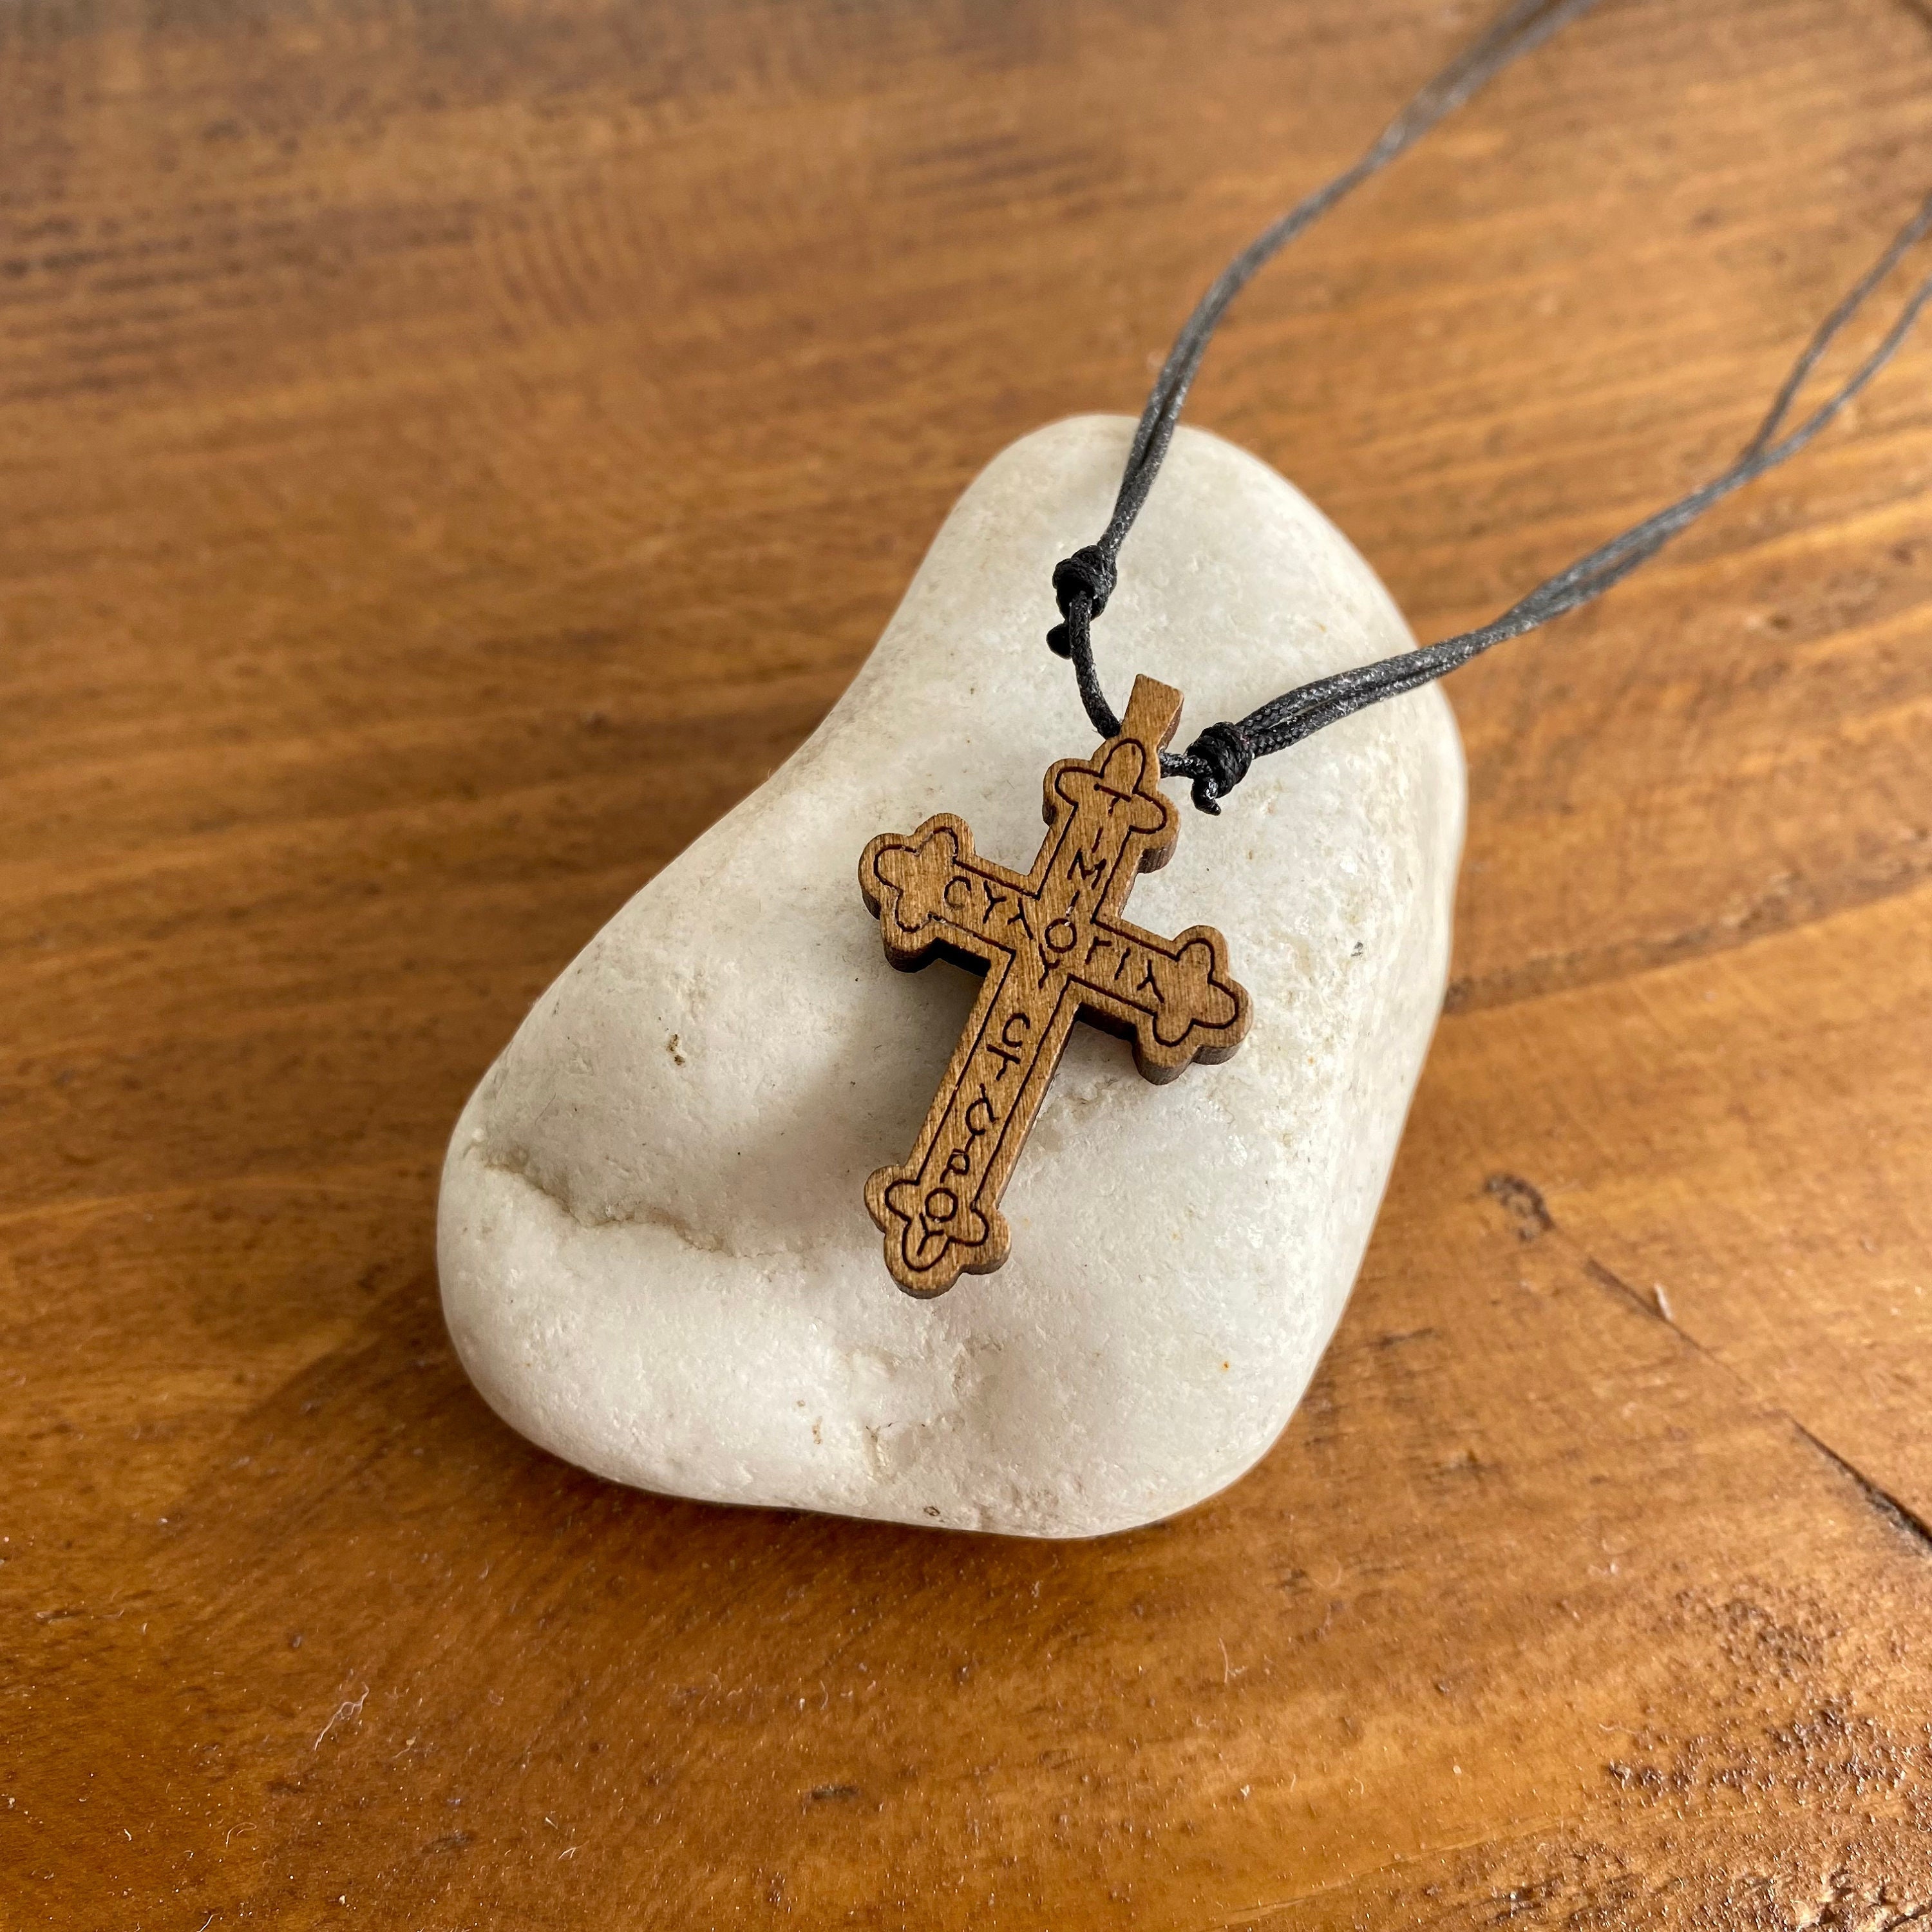 JISHGS Natural Wood Cross Pendant Necklace for Men Women Boy Girls , Cross for Car Mirror Pendant,Wooden Cross Necklace Gift